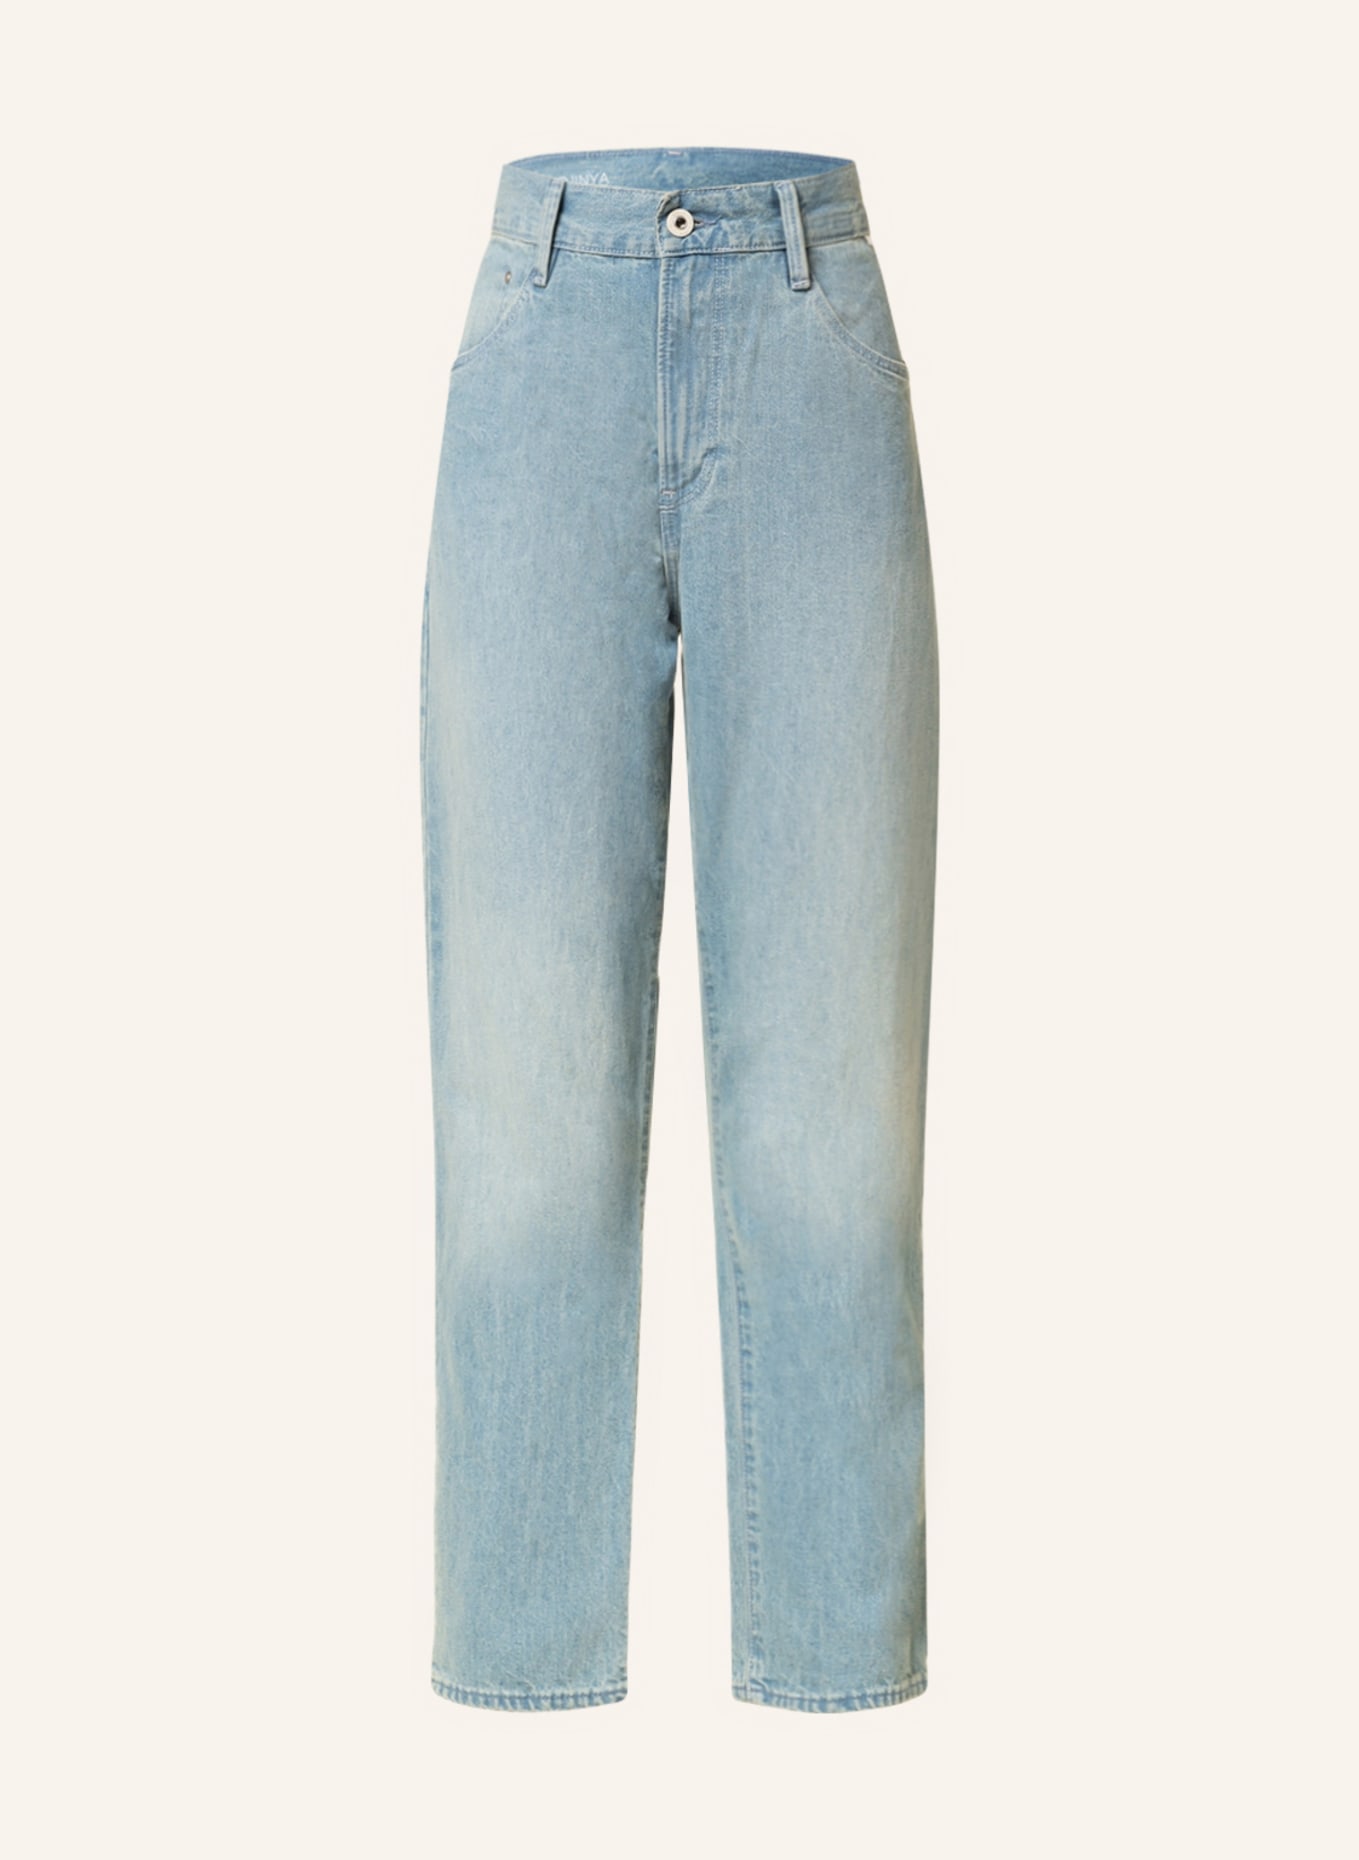 G-Star RAW Jeans VIRJINYA, Farbe: C949 vintage hawaiian ocean (Bild 1)